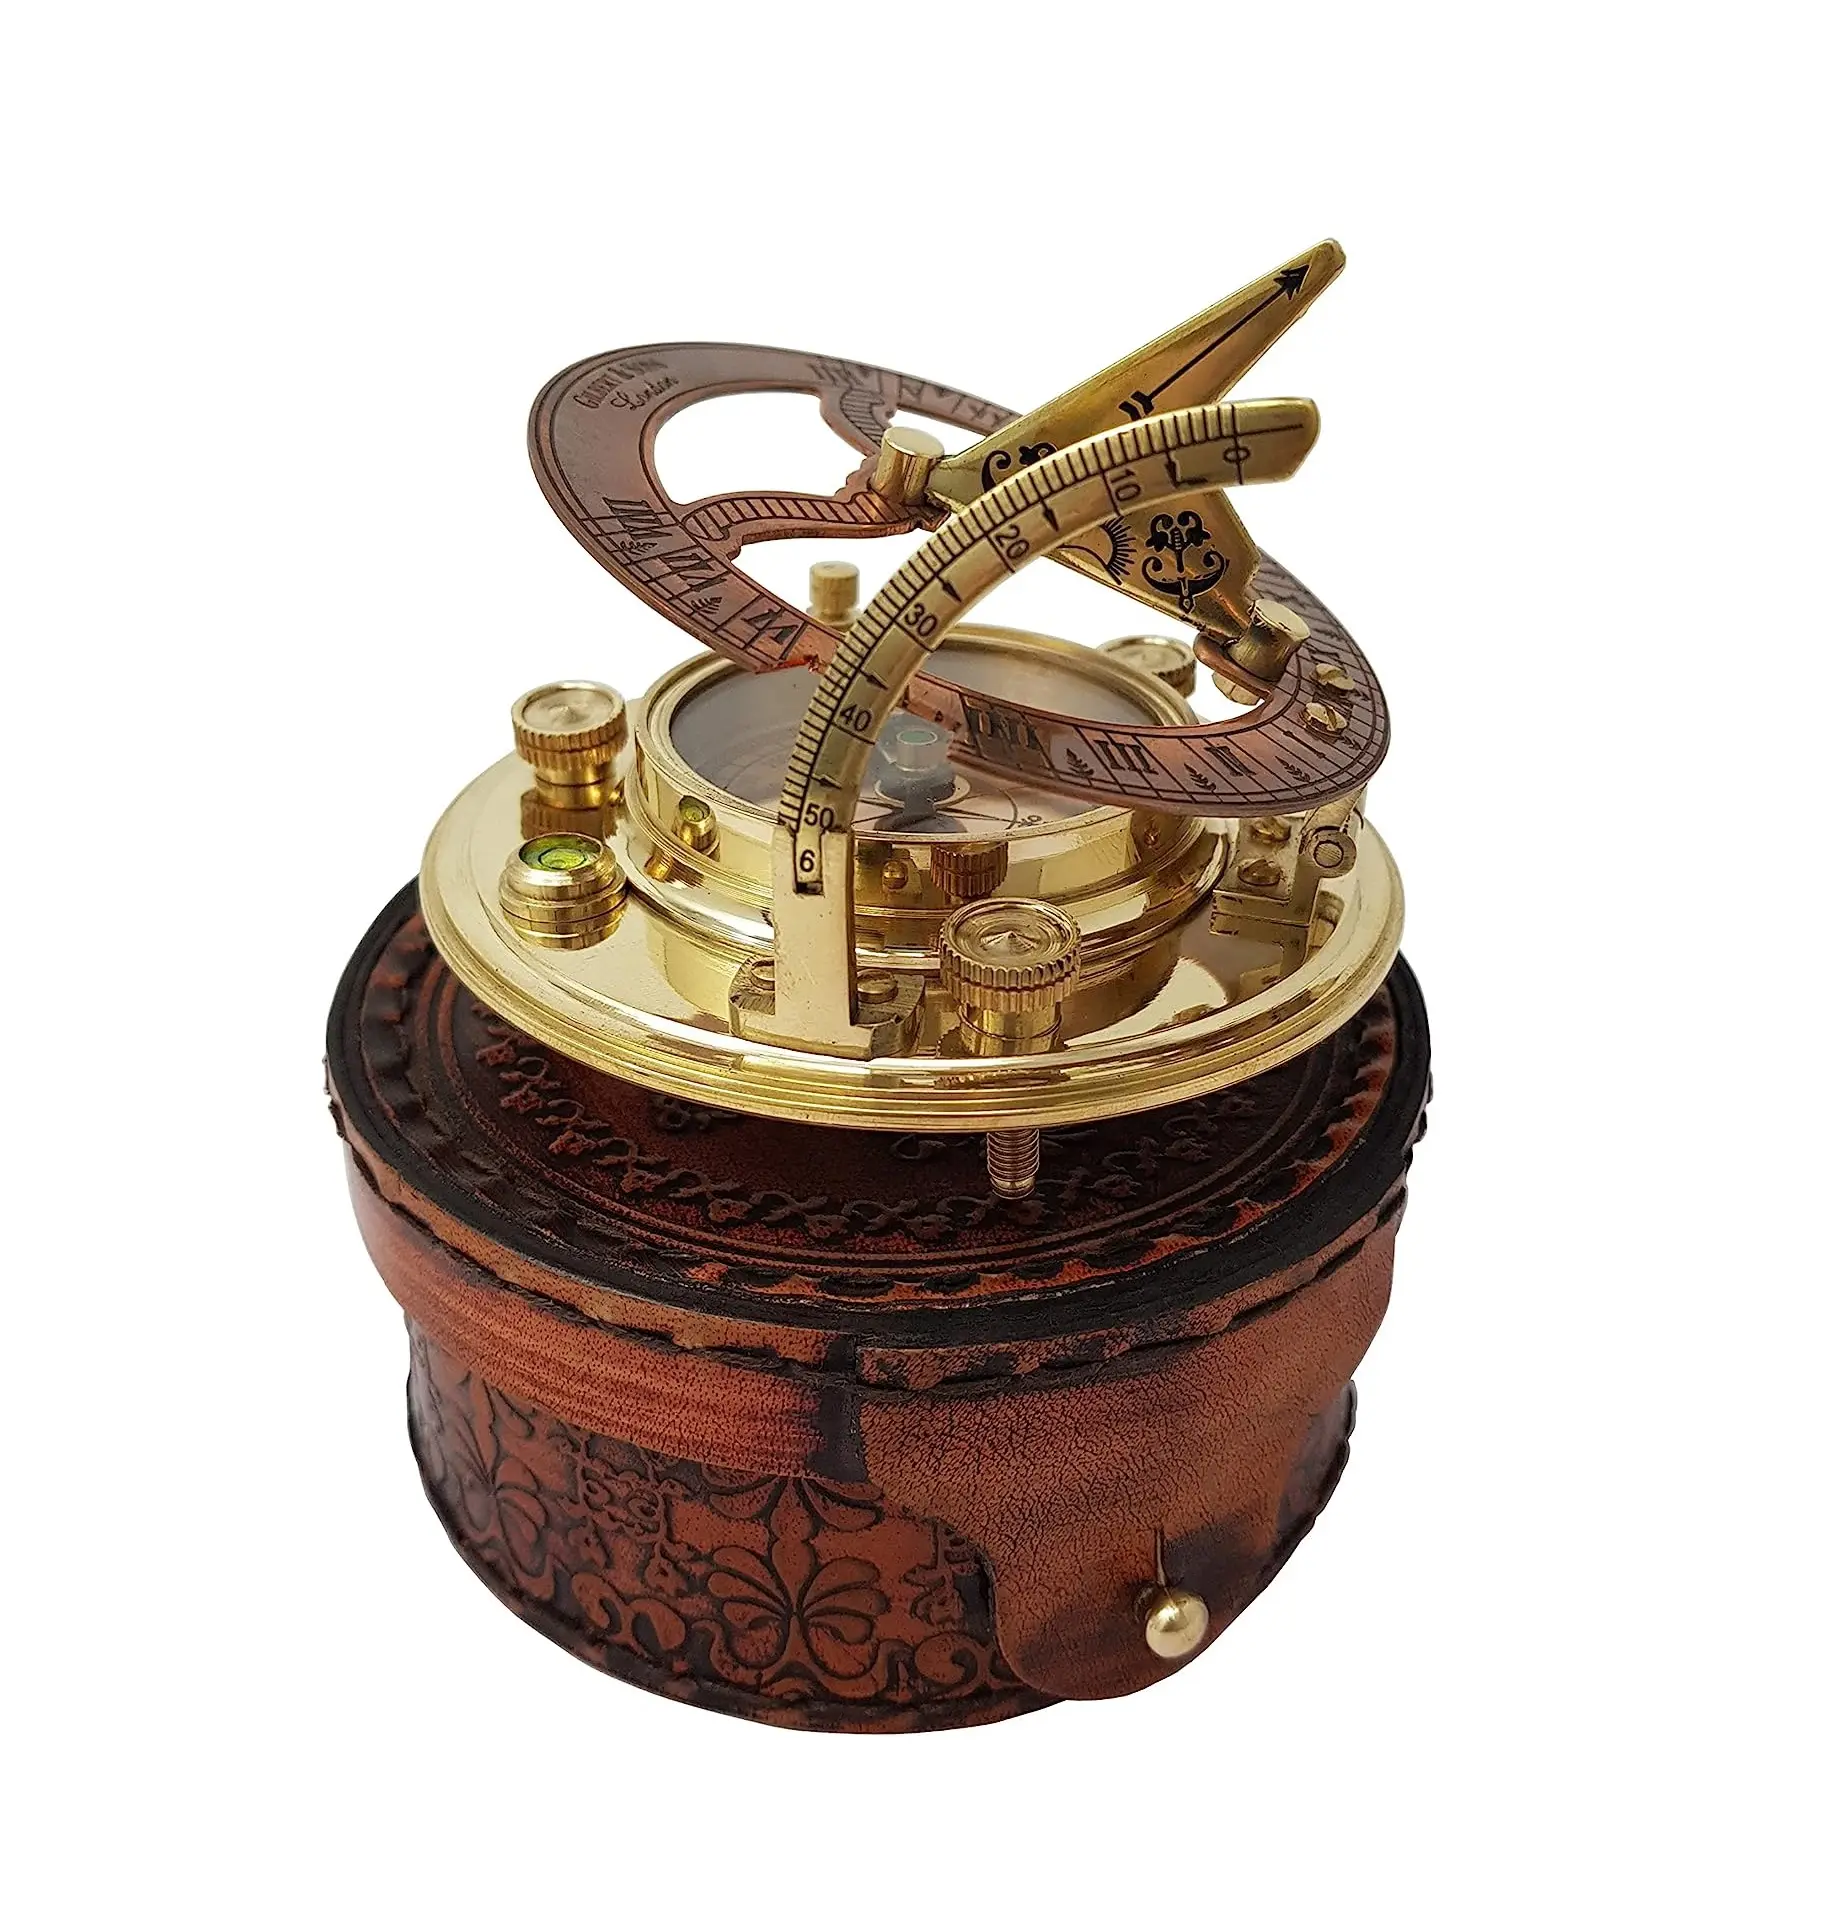 Wholesale price Antique Brass & Copper Sundial Compass Sundial Clock Box Gift Sun Clock Watch